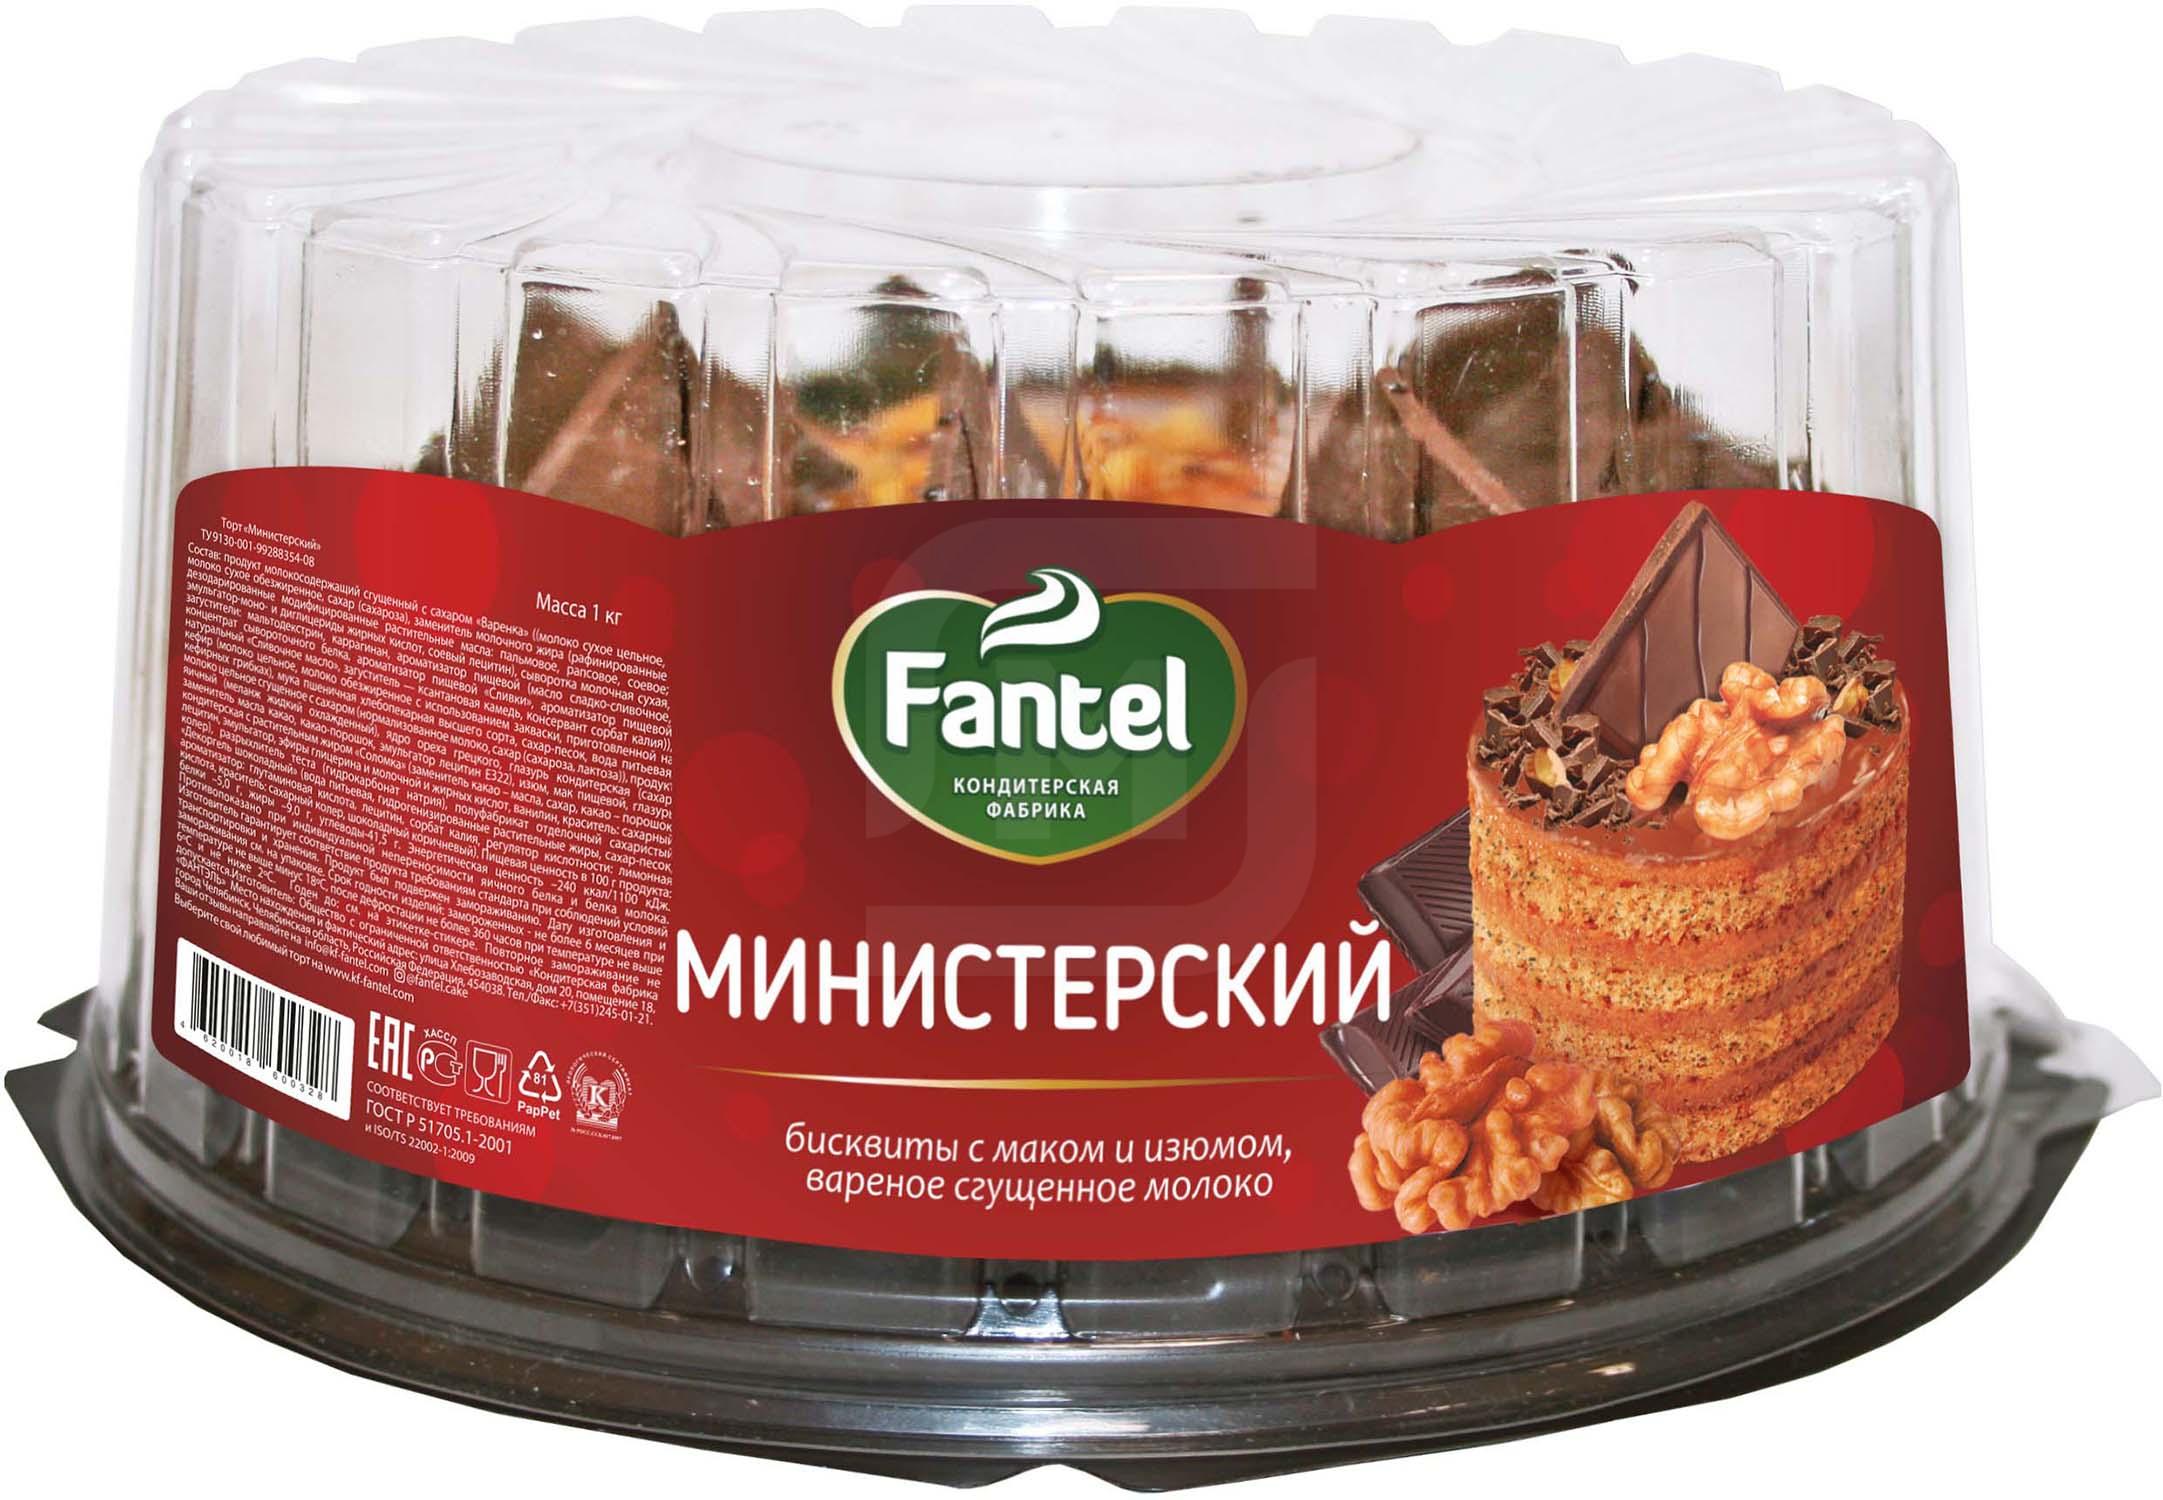 Торт Fantel Министерский